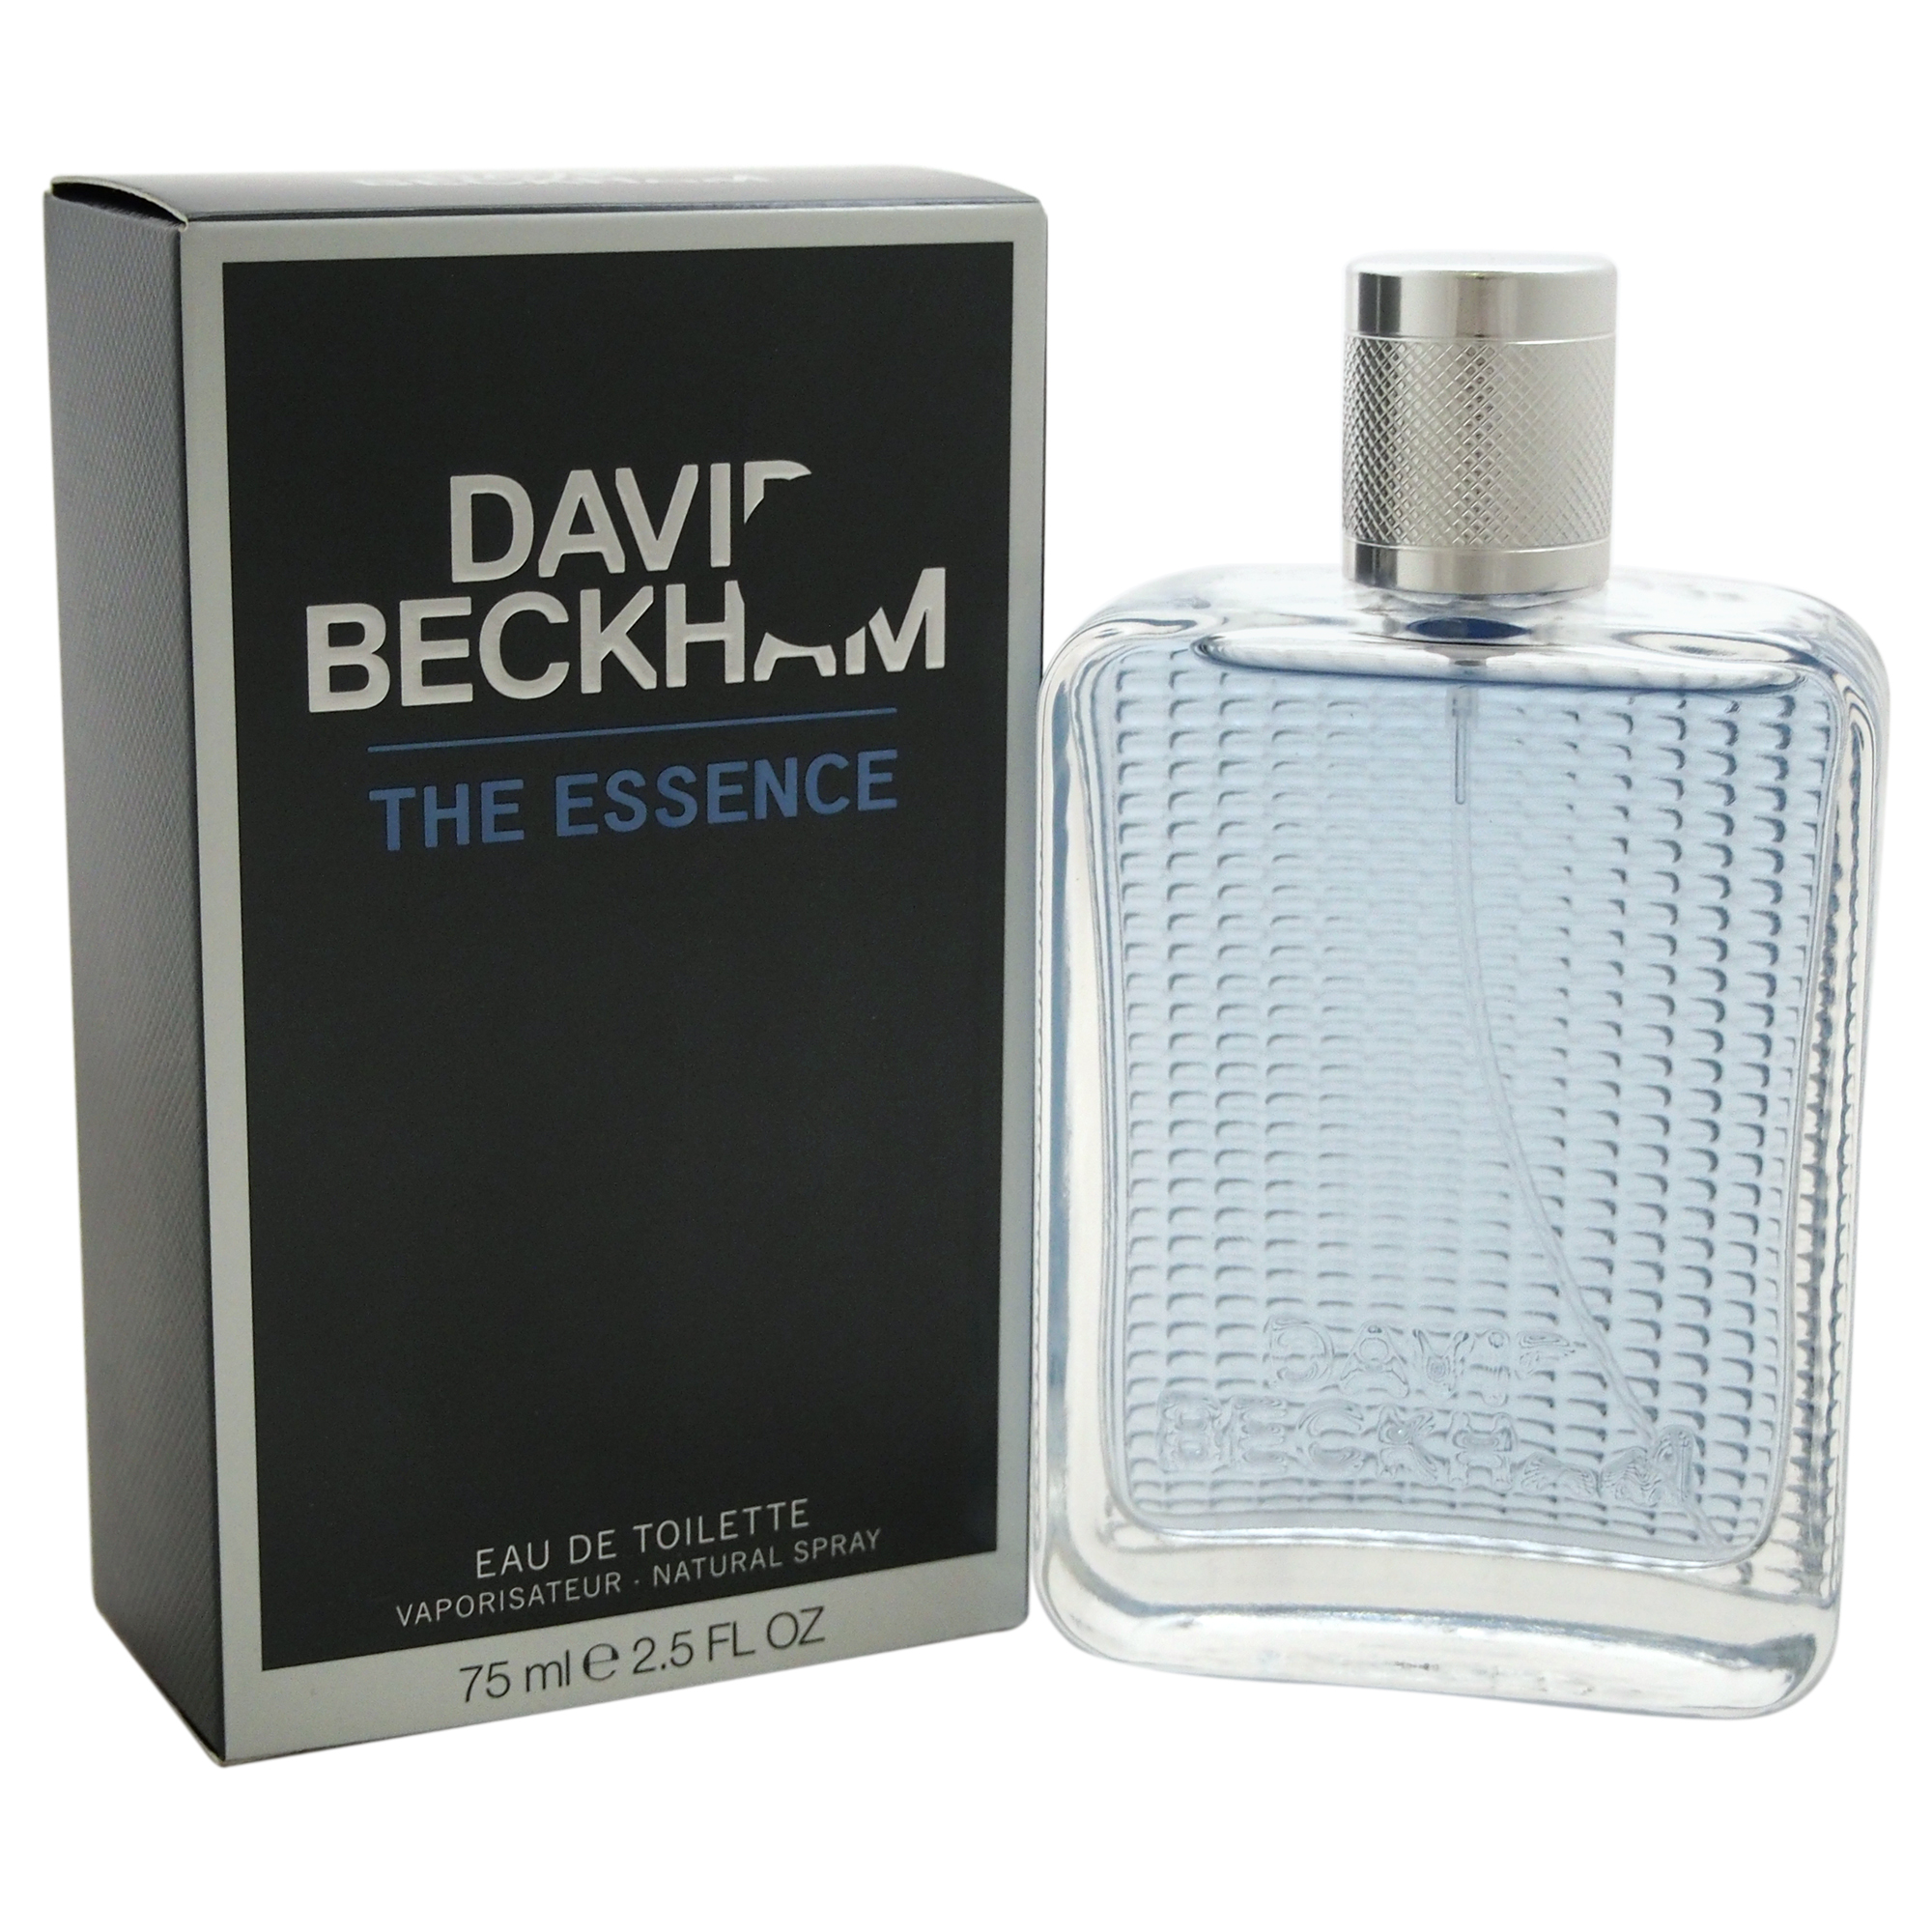 The Essence by David Beckham for Men - 2.5 oz EDT Spray